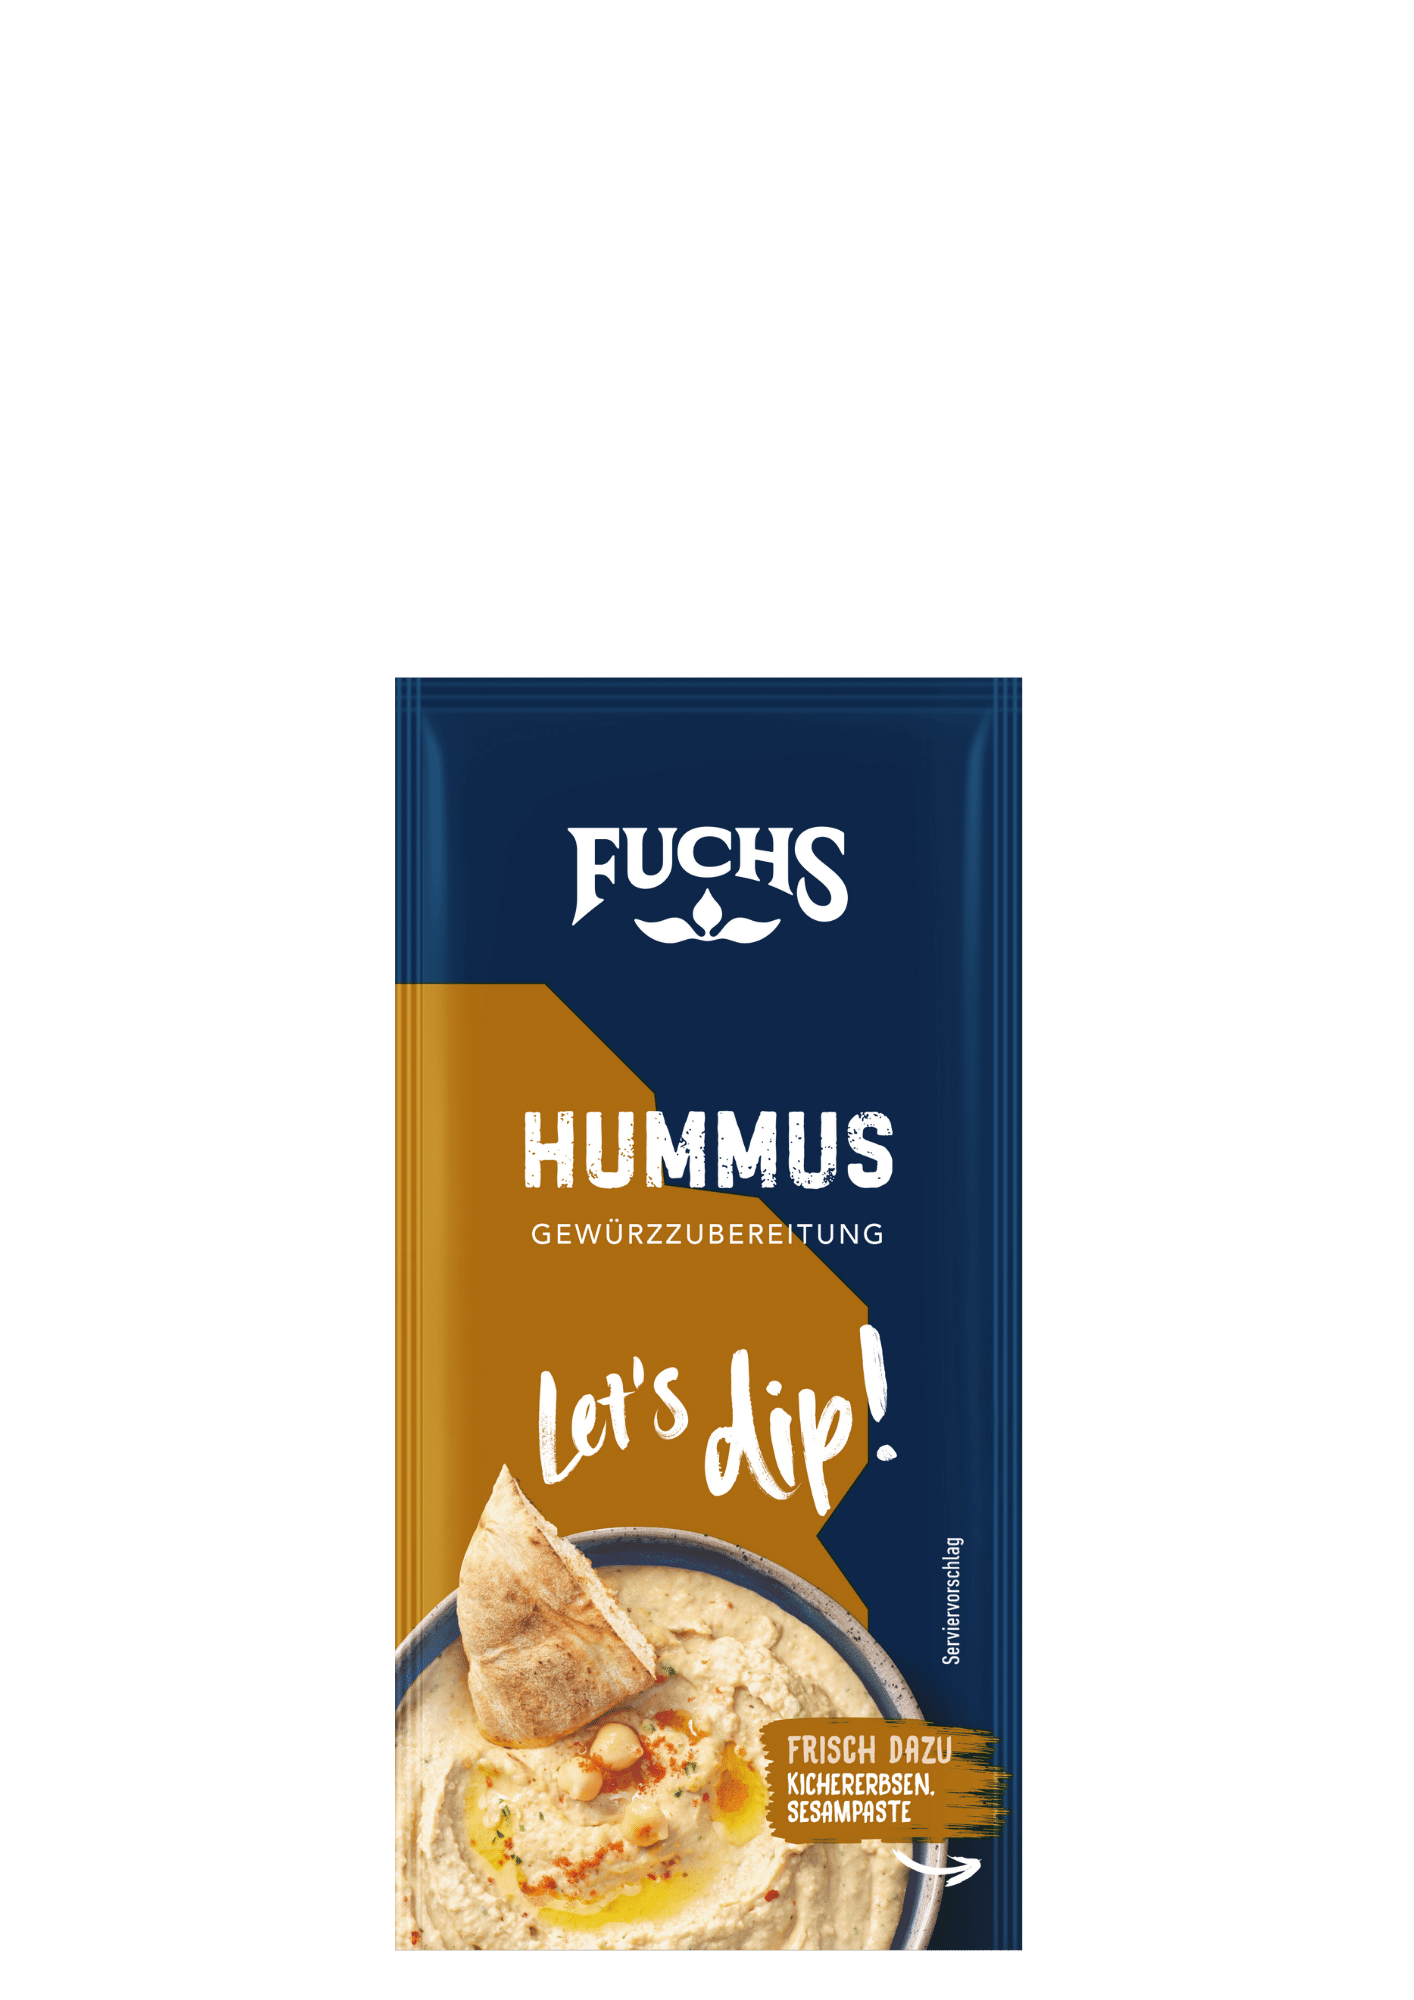 Let's dip! Hummus